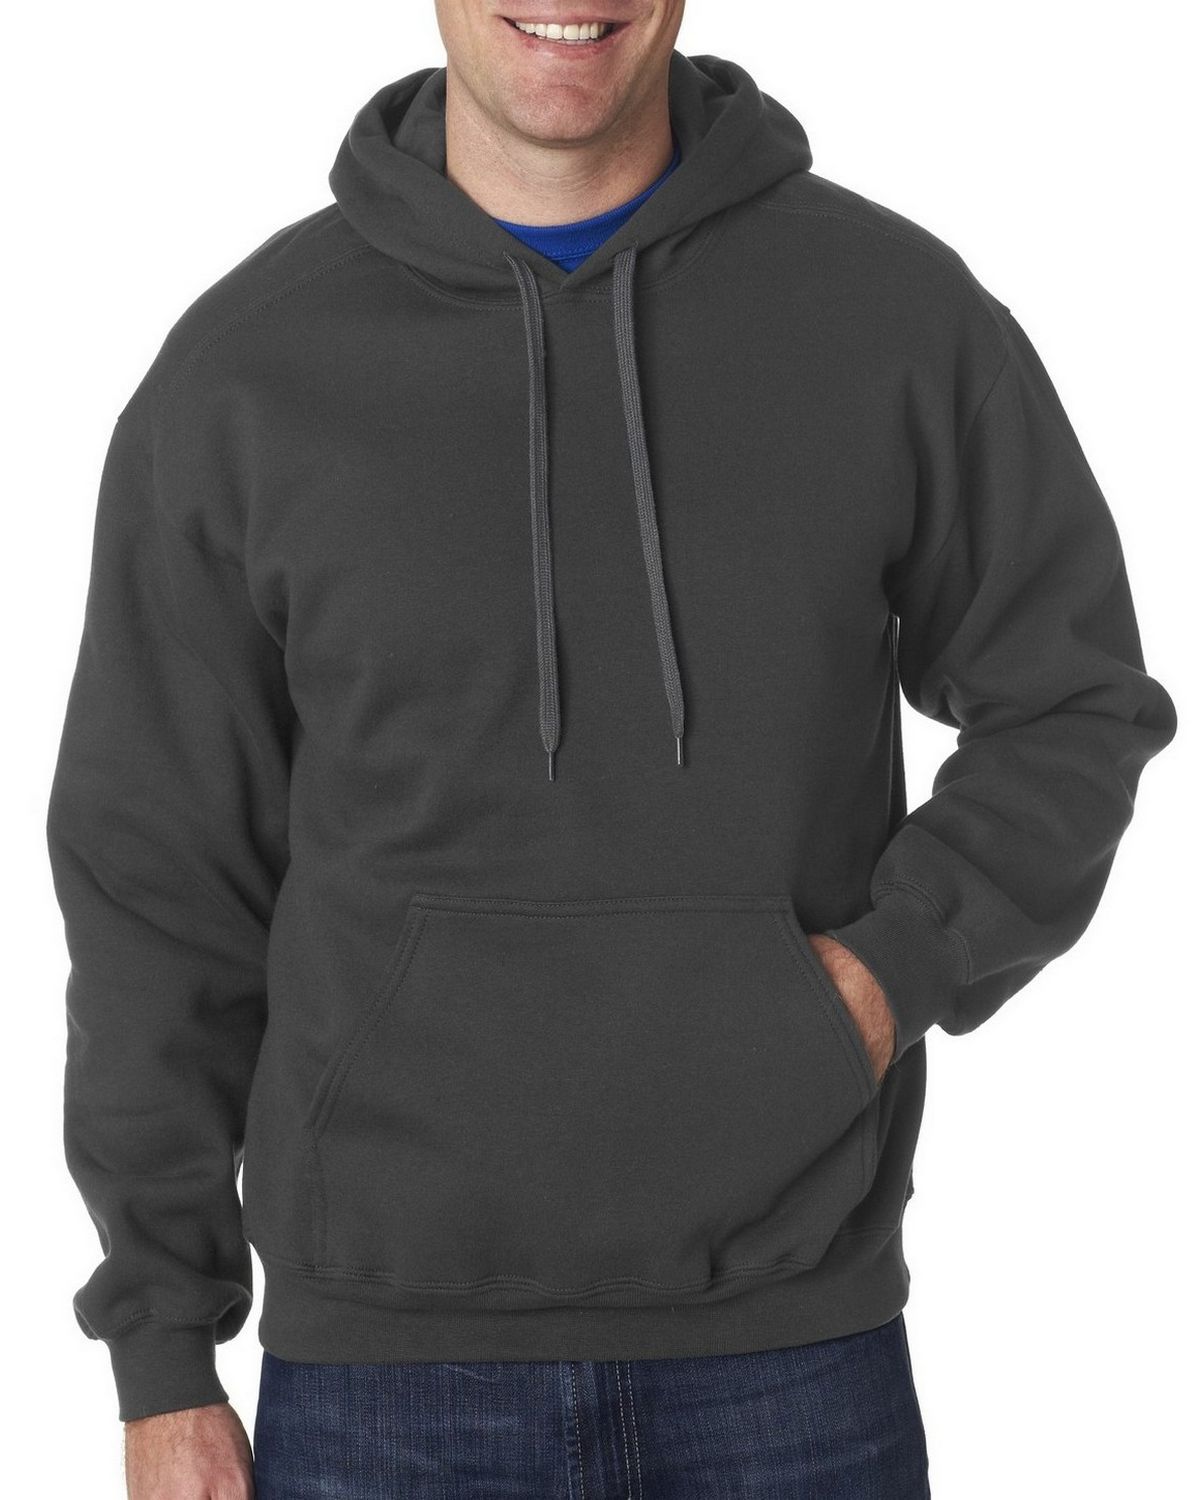 Gildan 92500 Adult Premium Cotton Hooded Sweatshirt